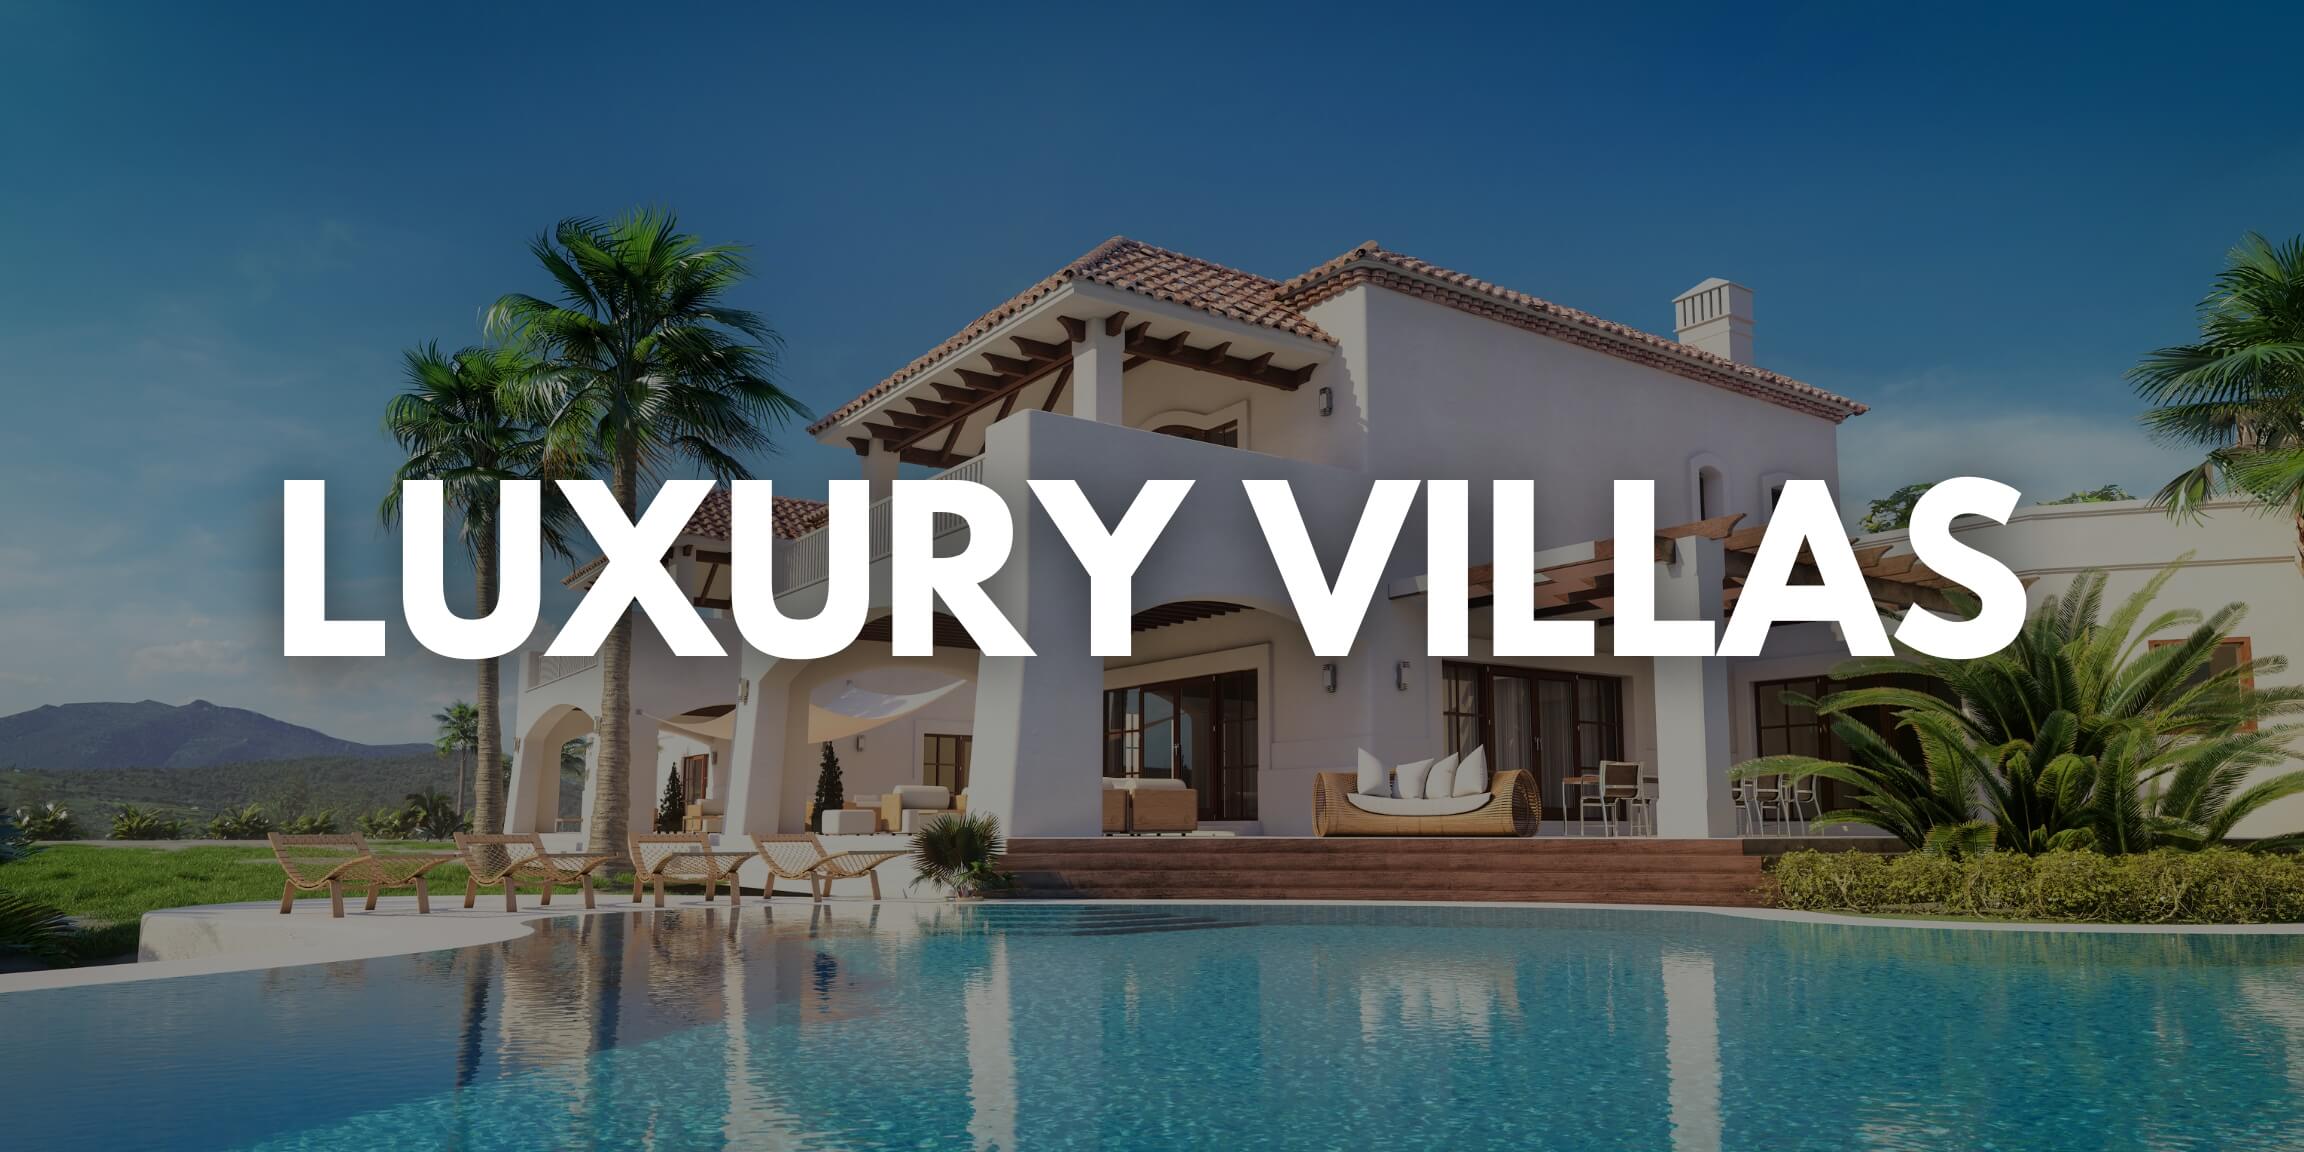 Luxury Villas Travel Agency